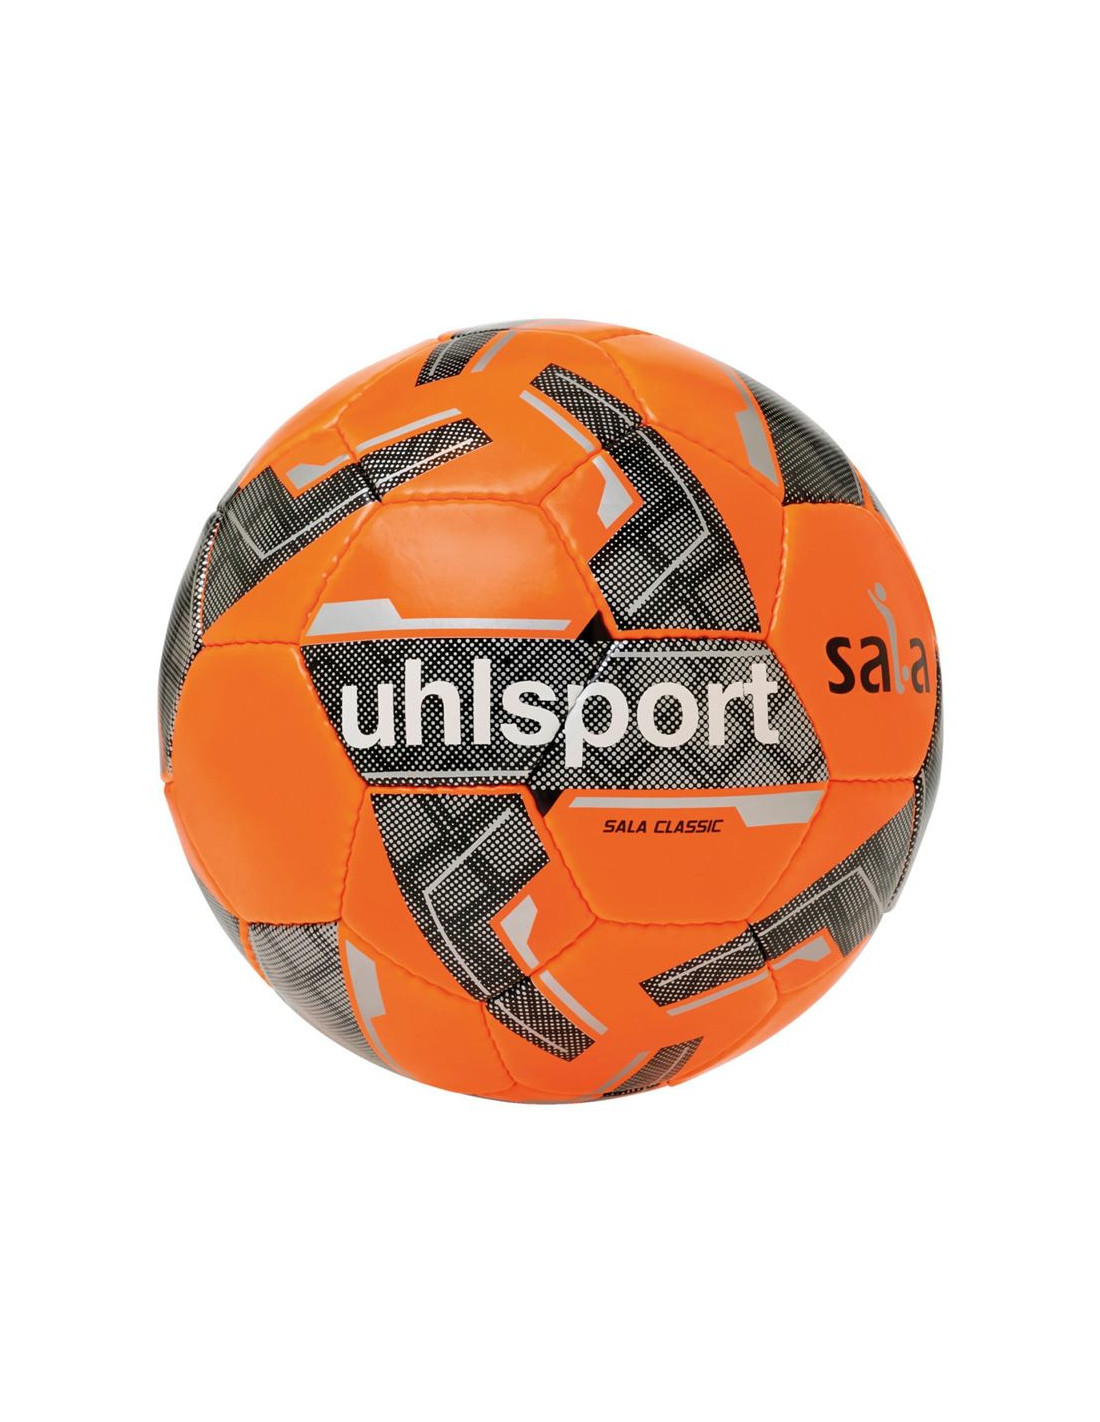 Balon de fútbol sala uhlsport sala classic naranja infantil